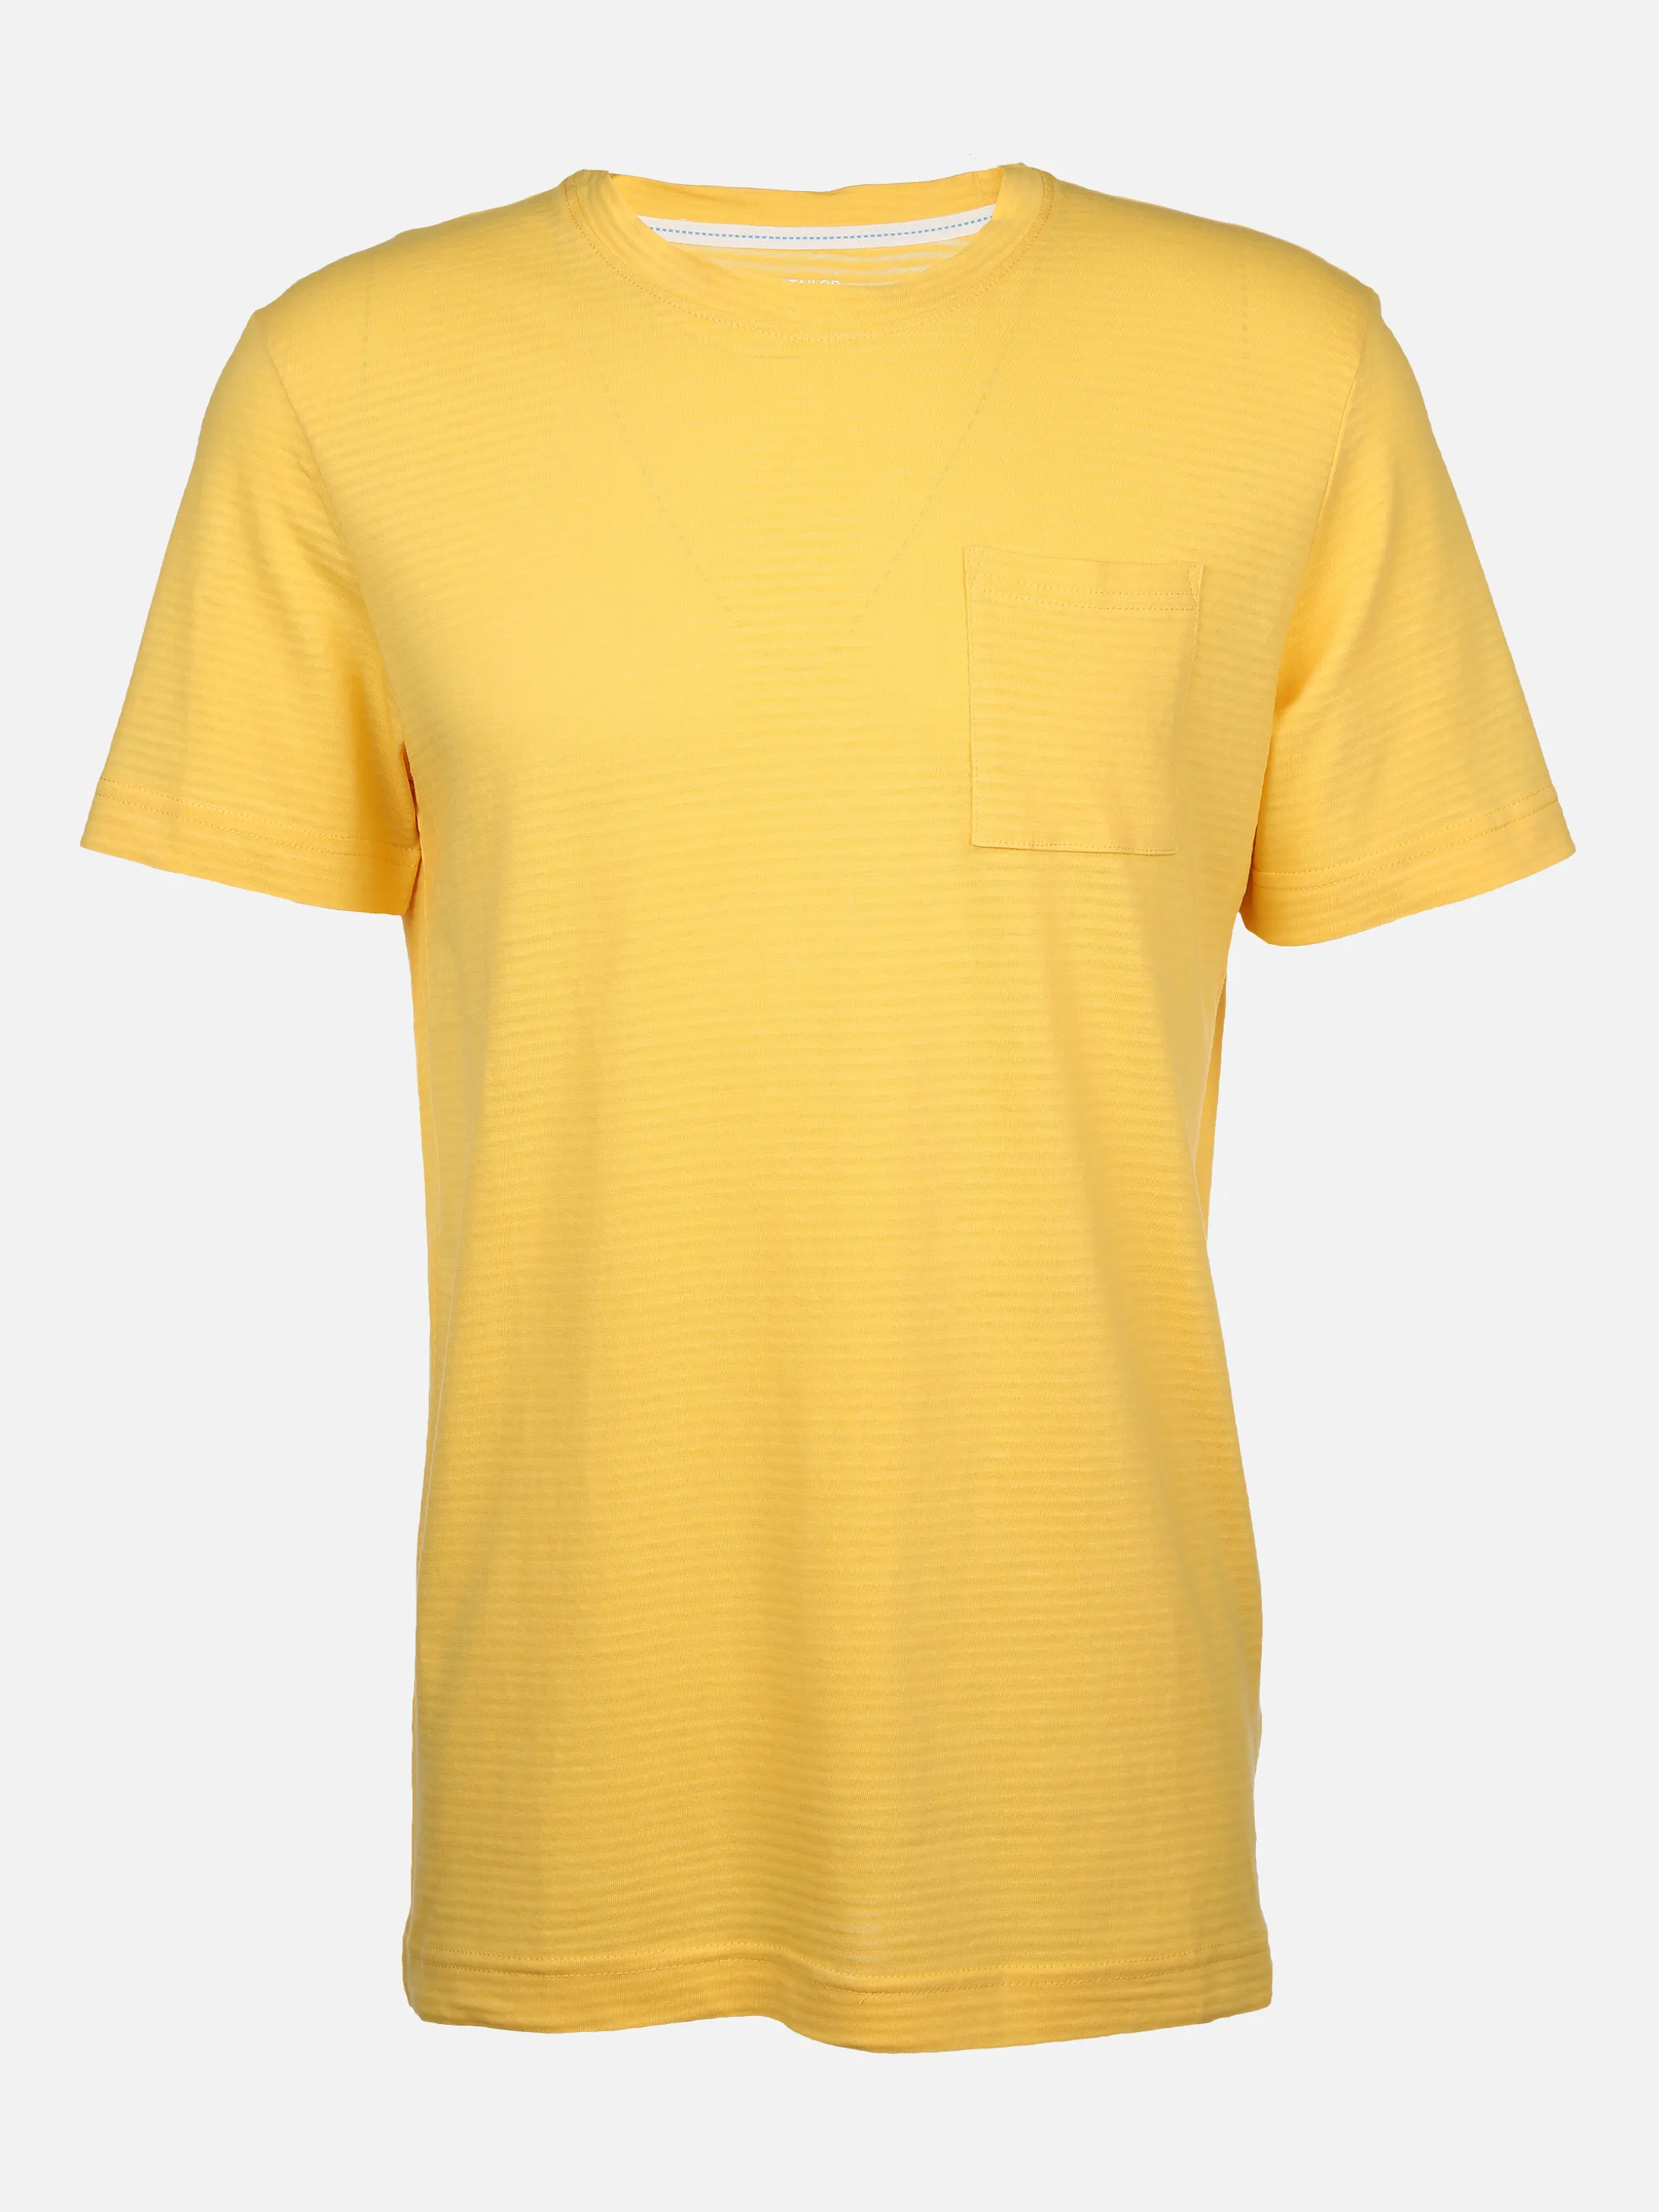 Tom Tailor 1036319 basic t-shirt with pocket Gelb 880551 16719 1